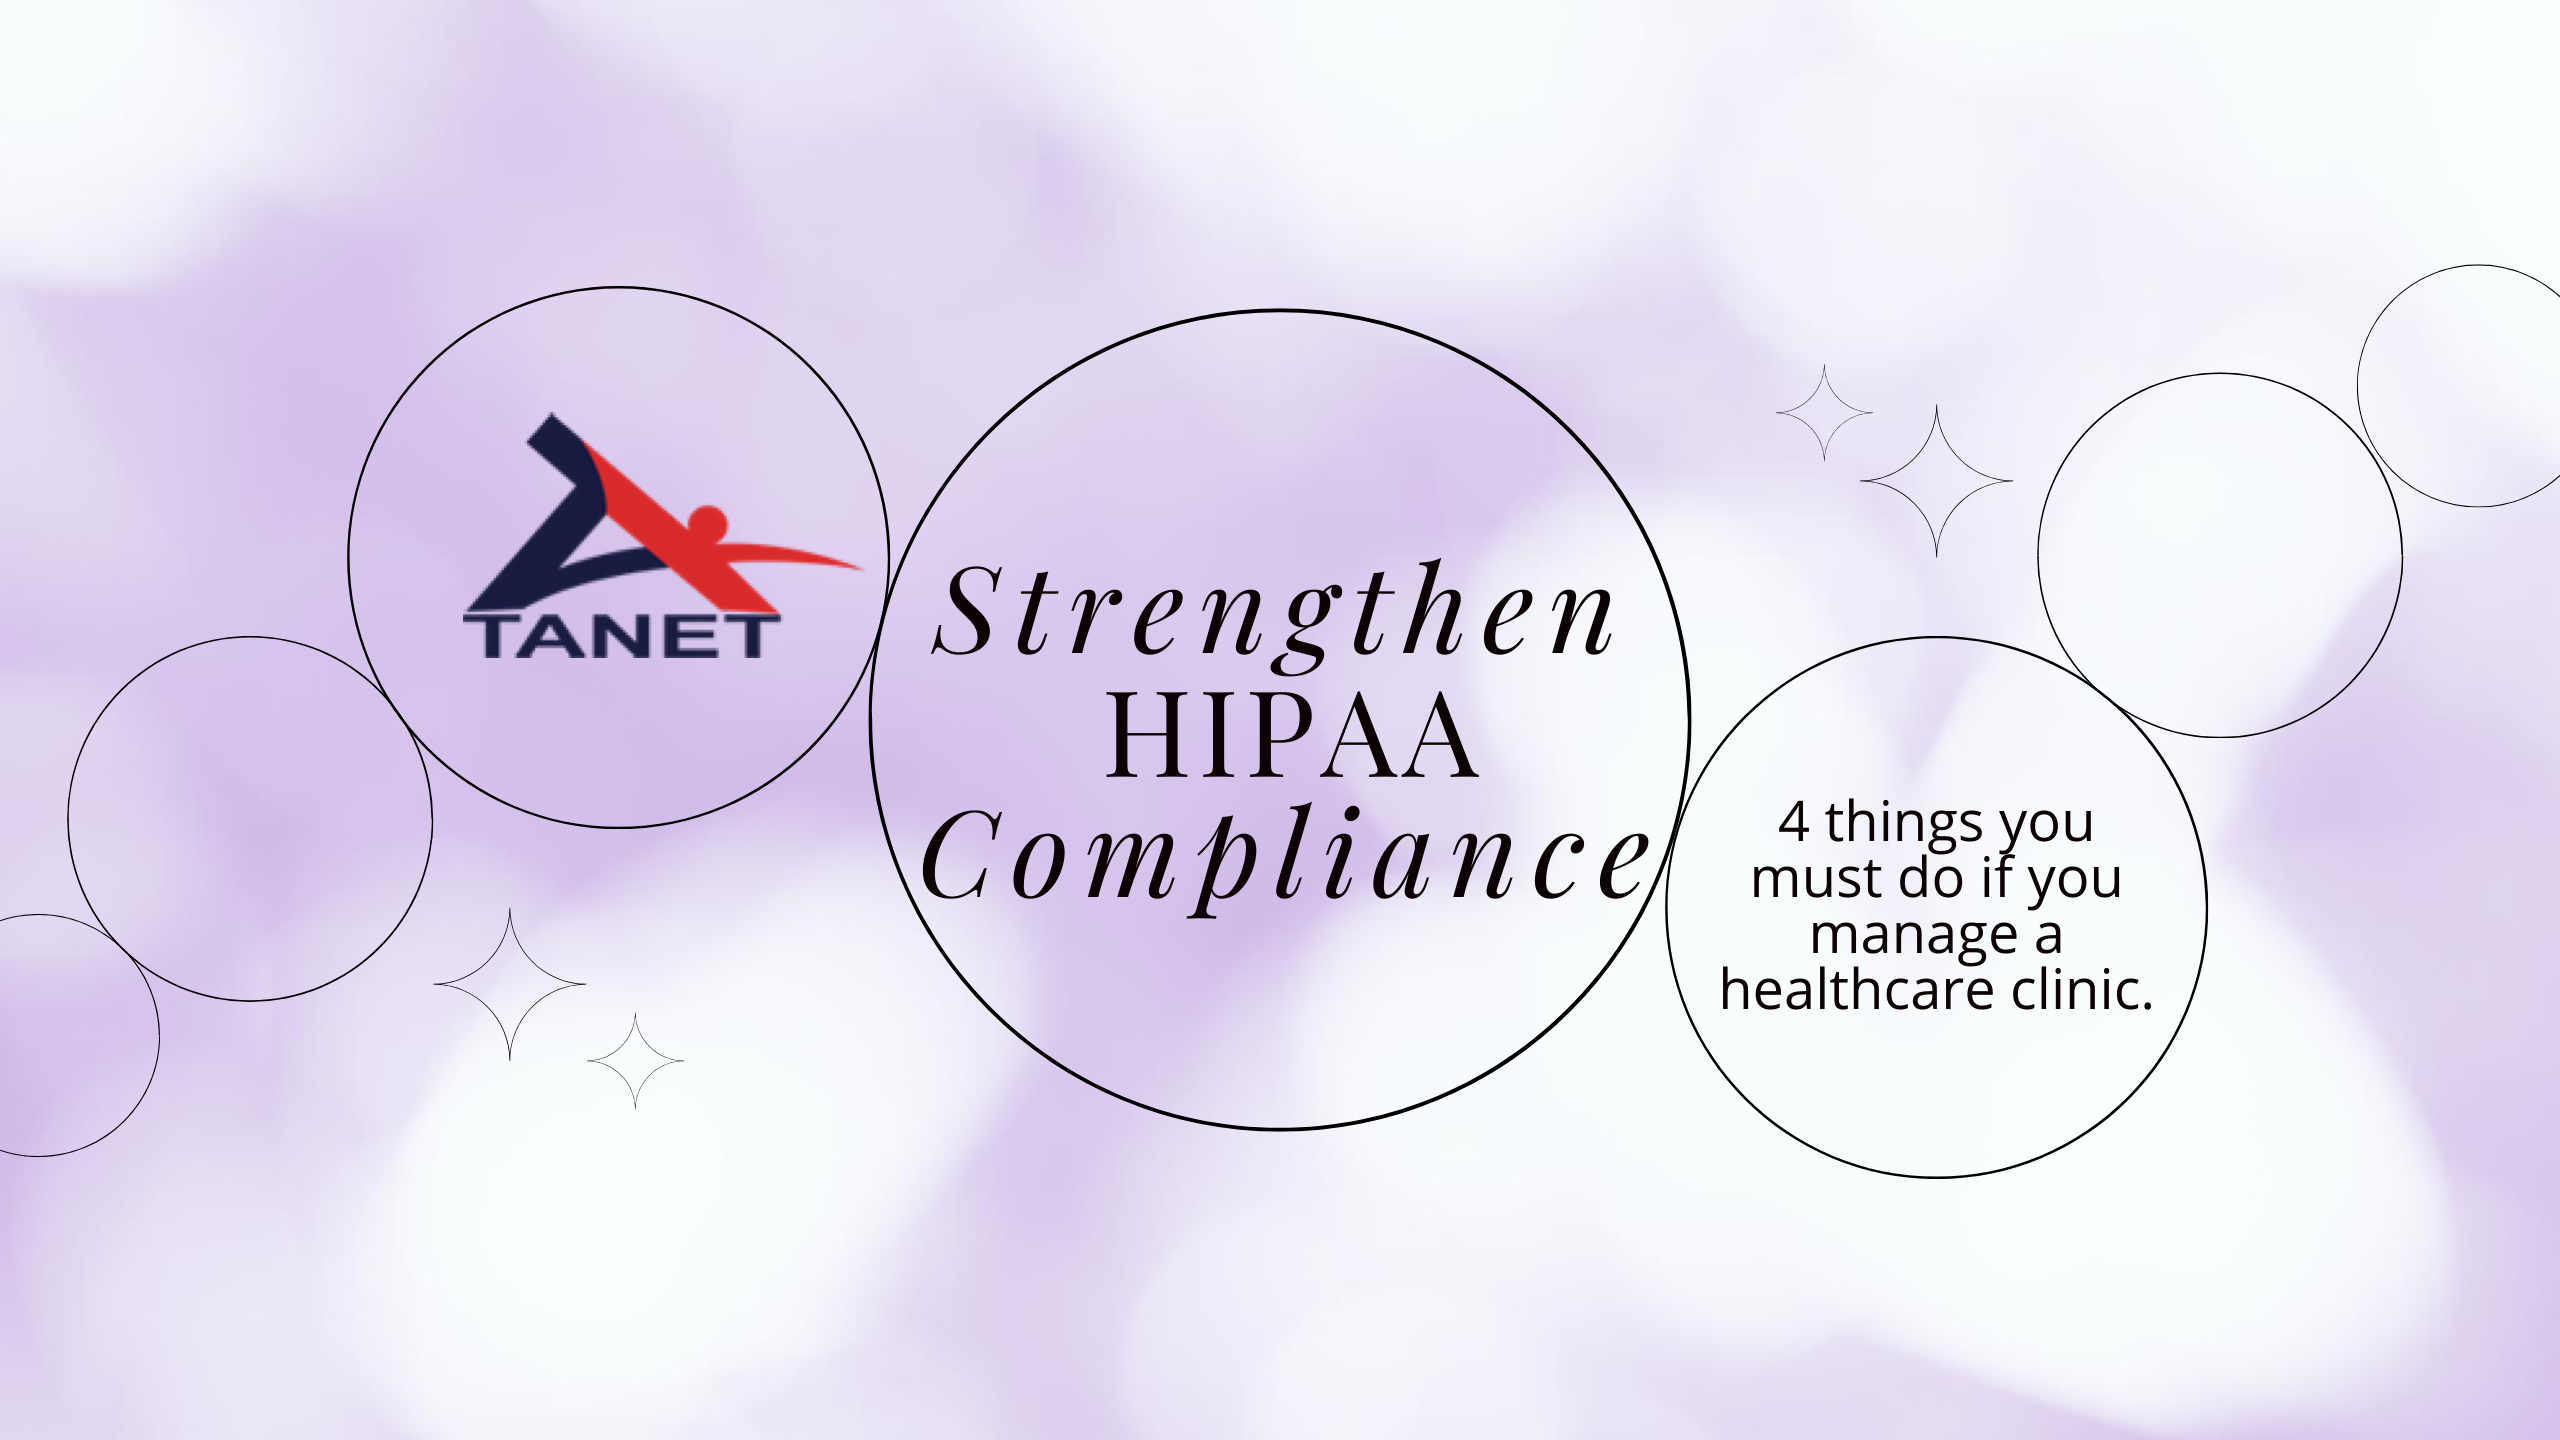 HIPAA compliance in healthcare clinics